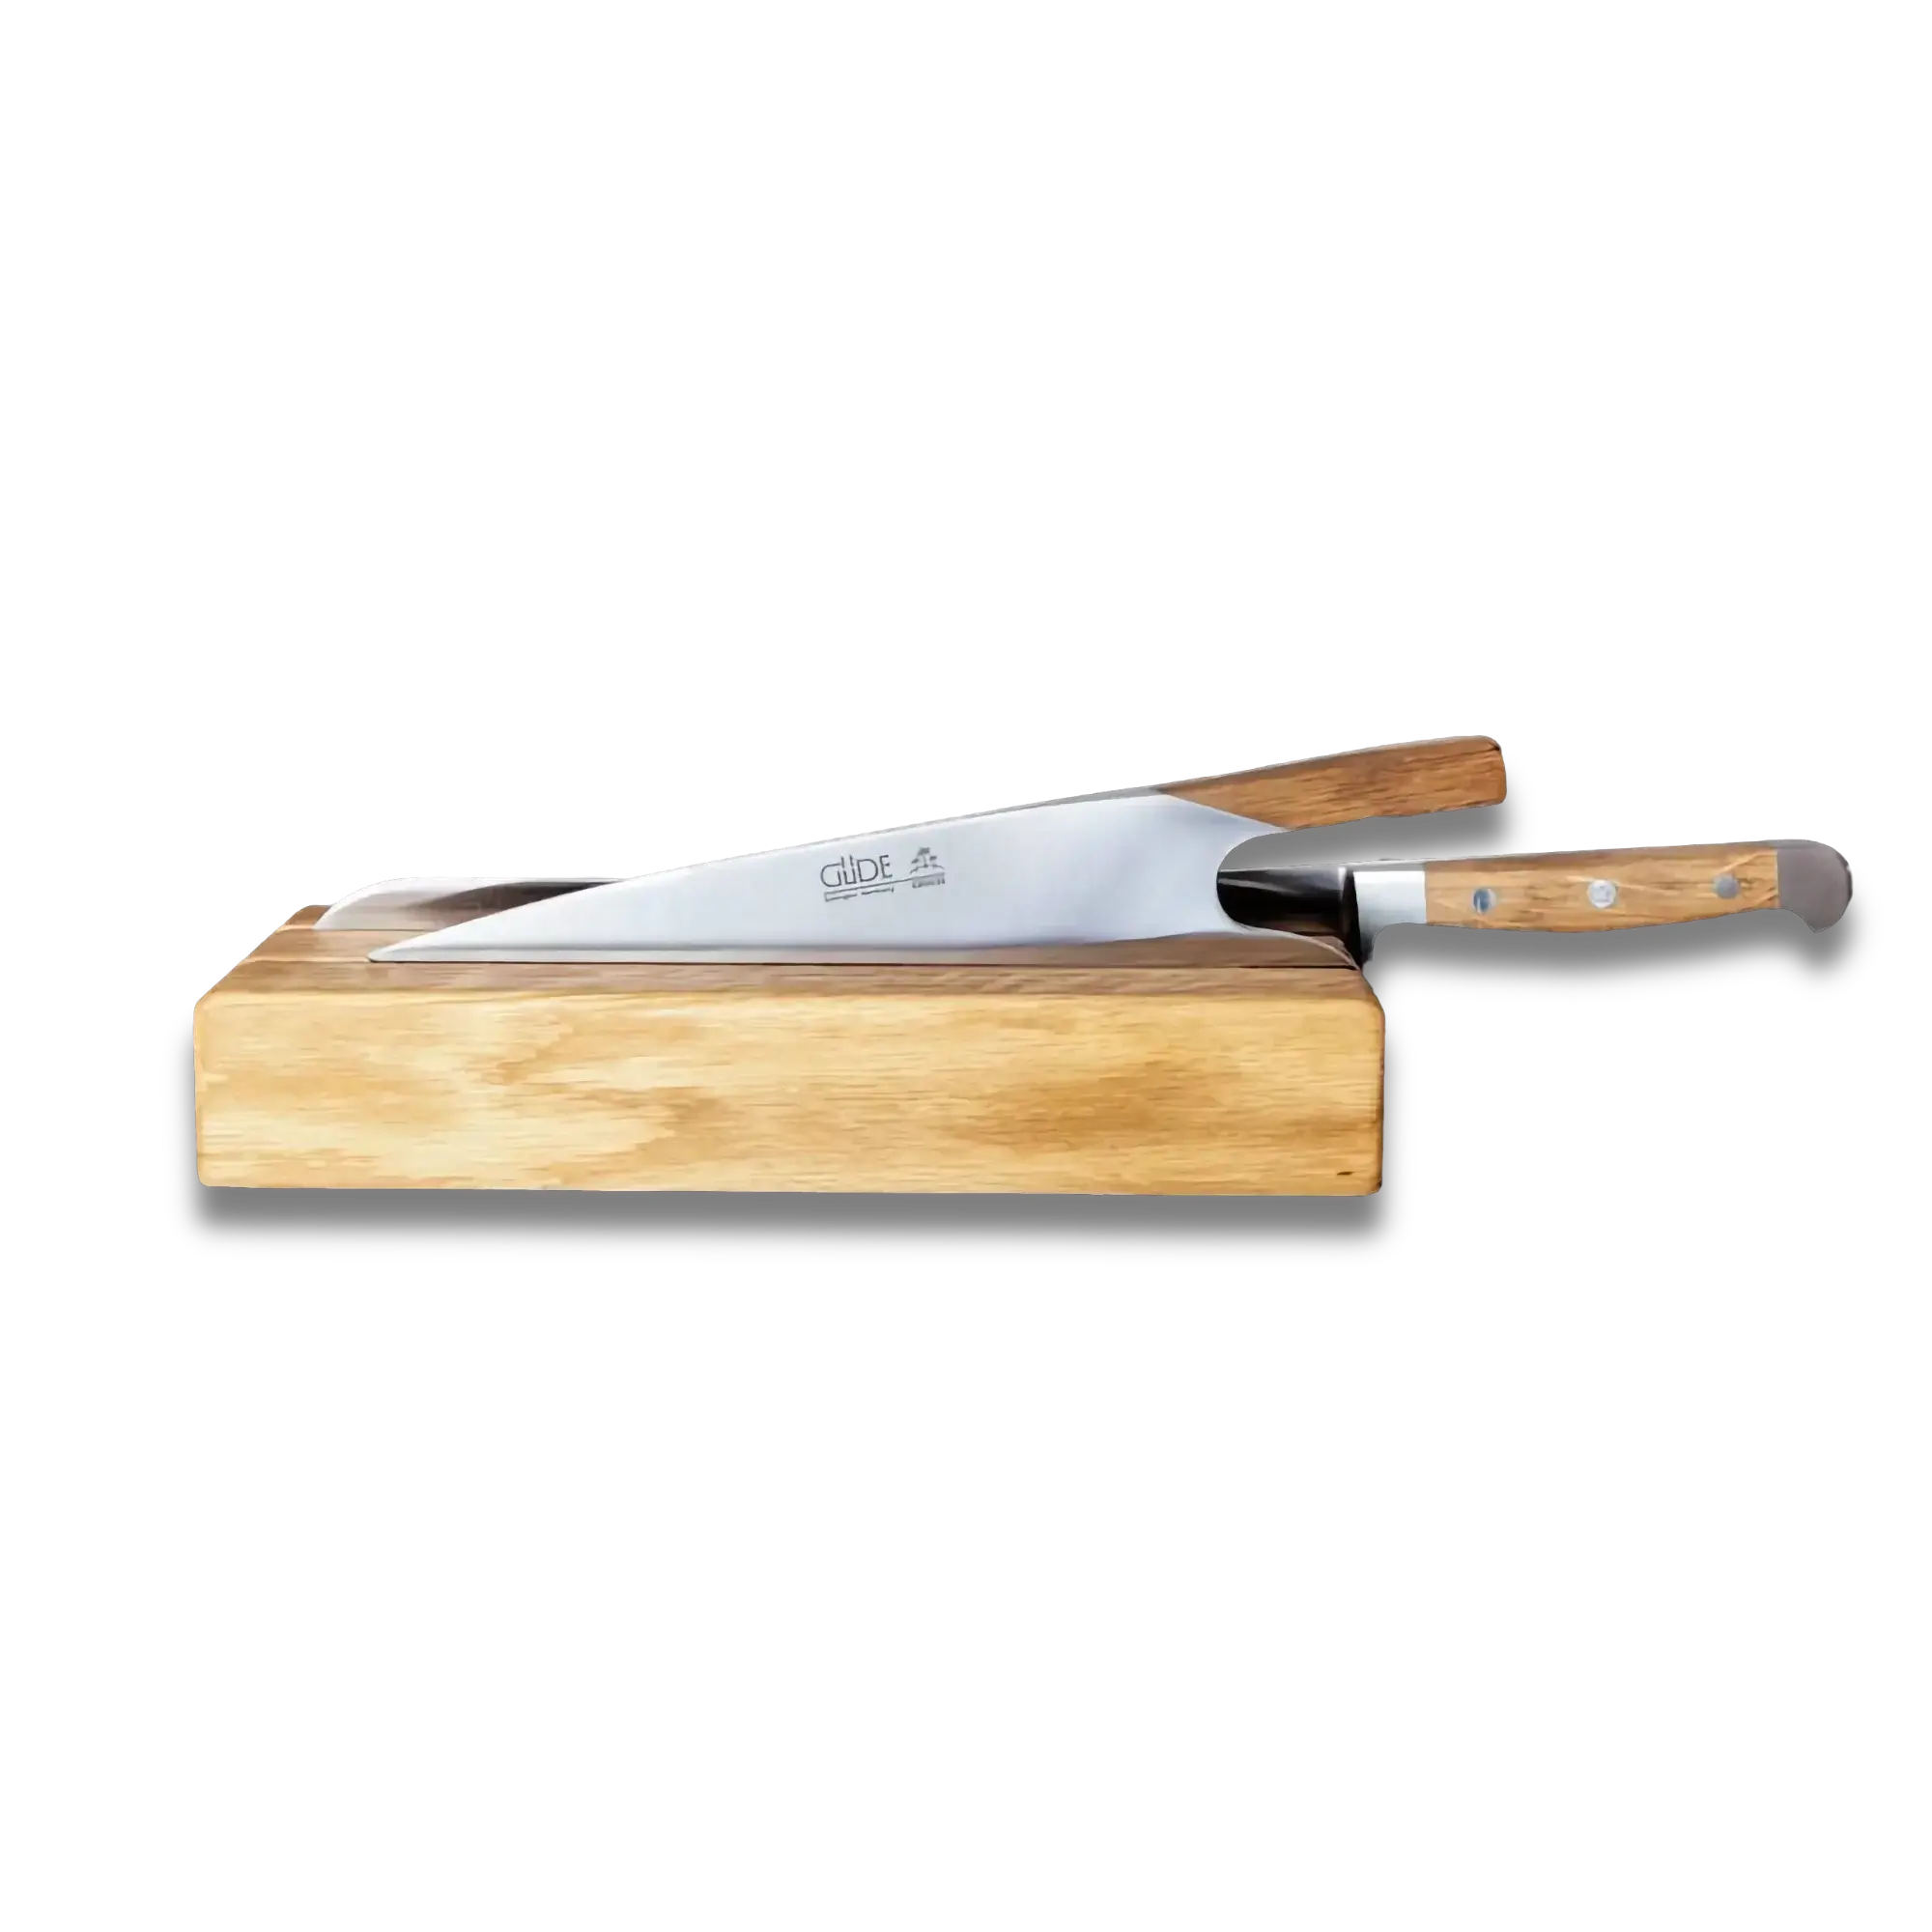 Knife Holder | Holds 2 knives - THE KNIFE + bread knife, (Knife Not Included)